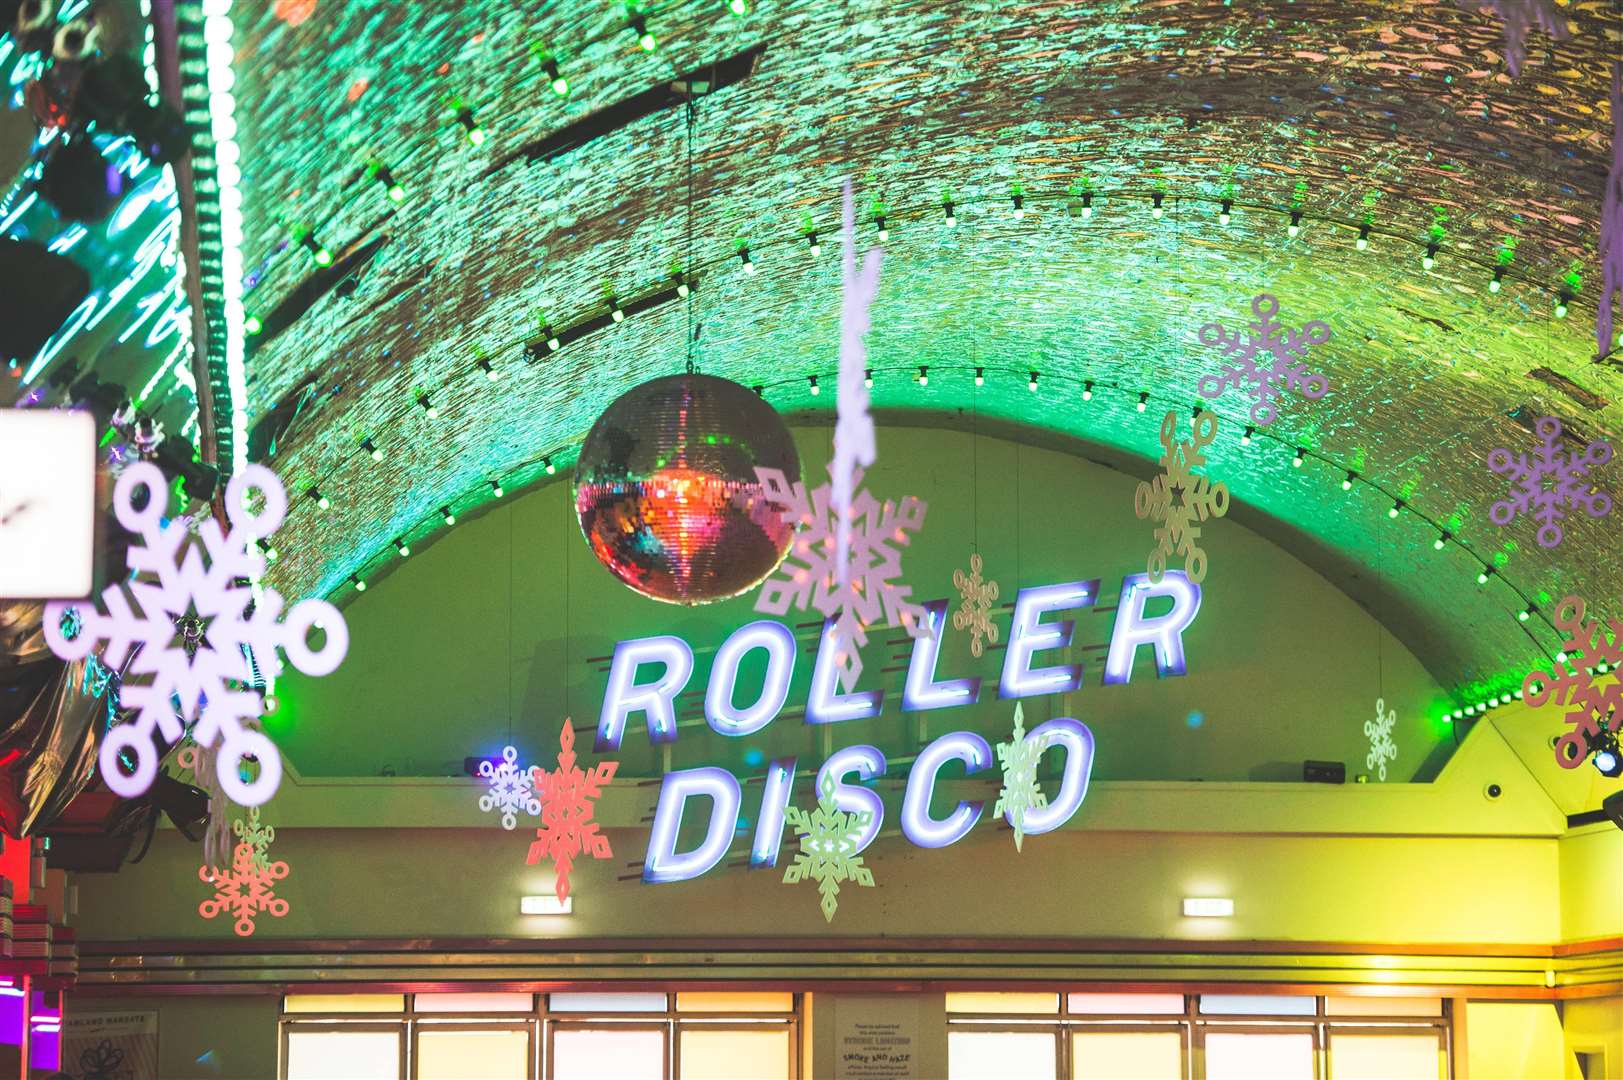 Dreamland's Roller Disco will be festive